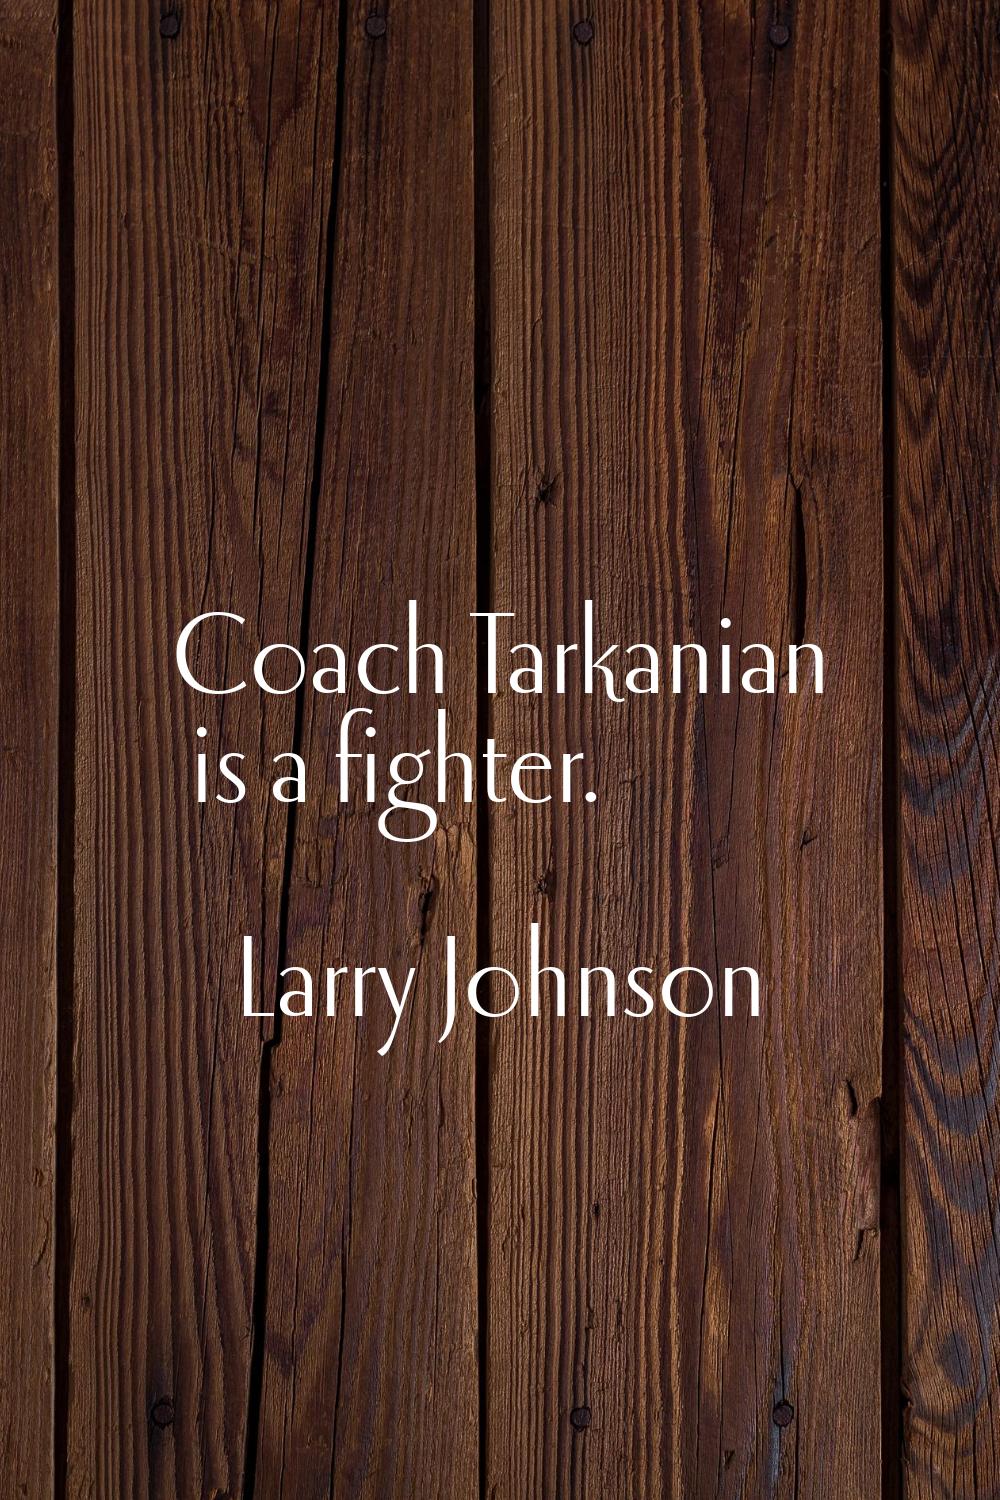 Coach Tarkanian is a fighter.